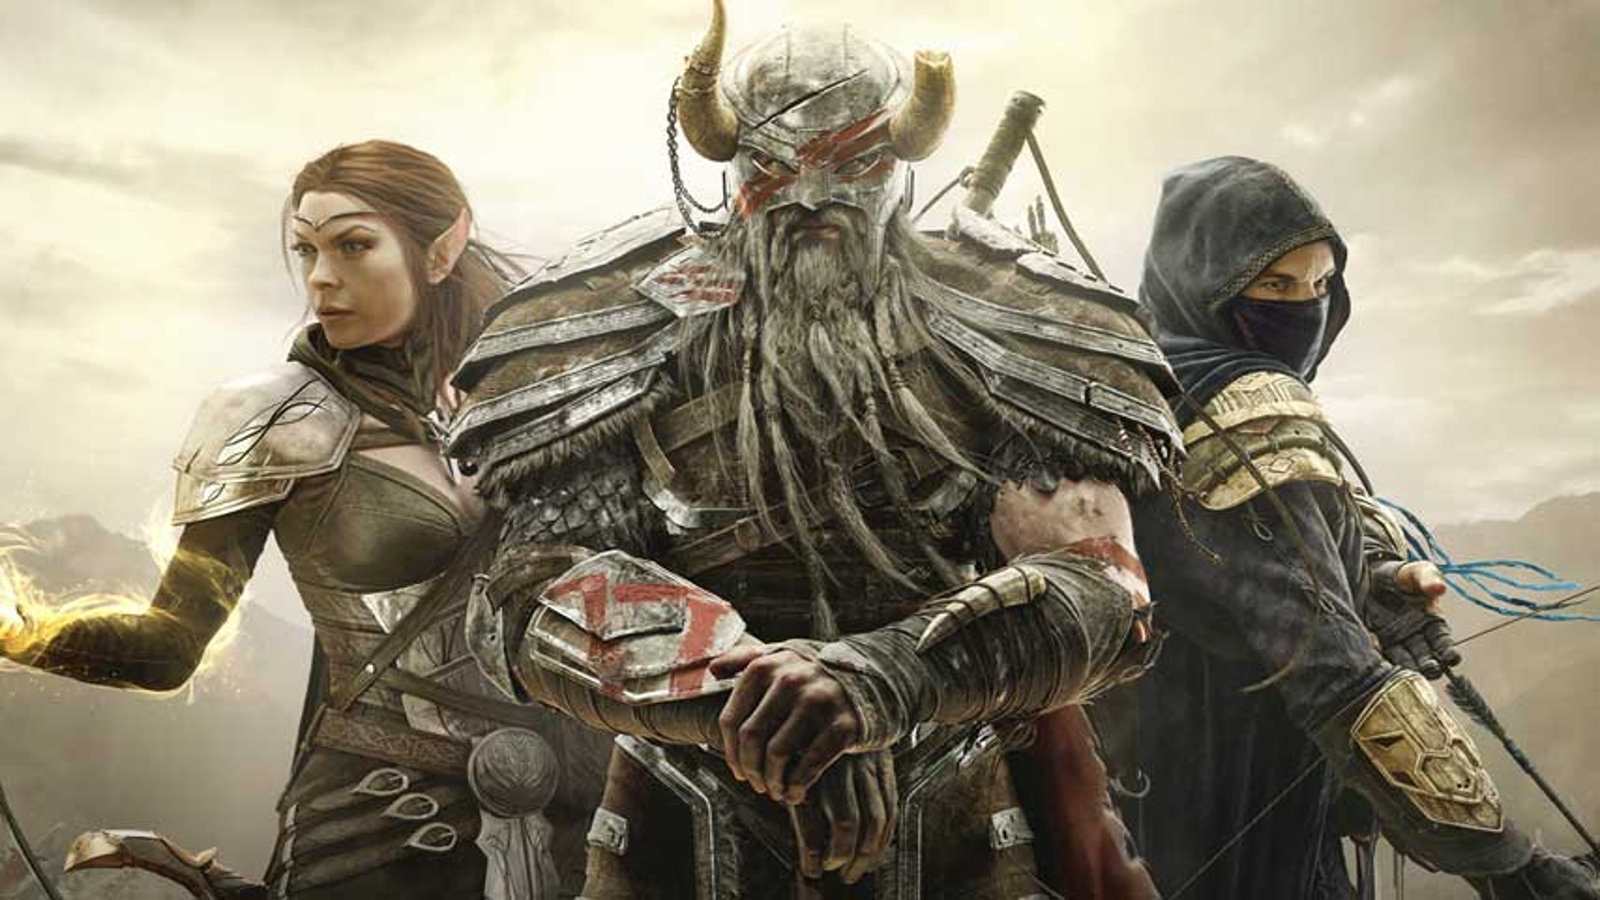 The Elder Scrolls Online: Legacy of the Bretons - Trailer